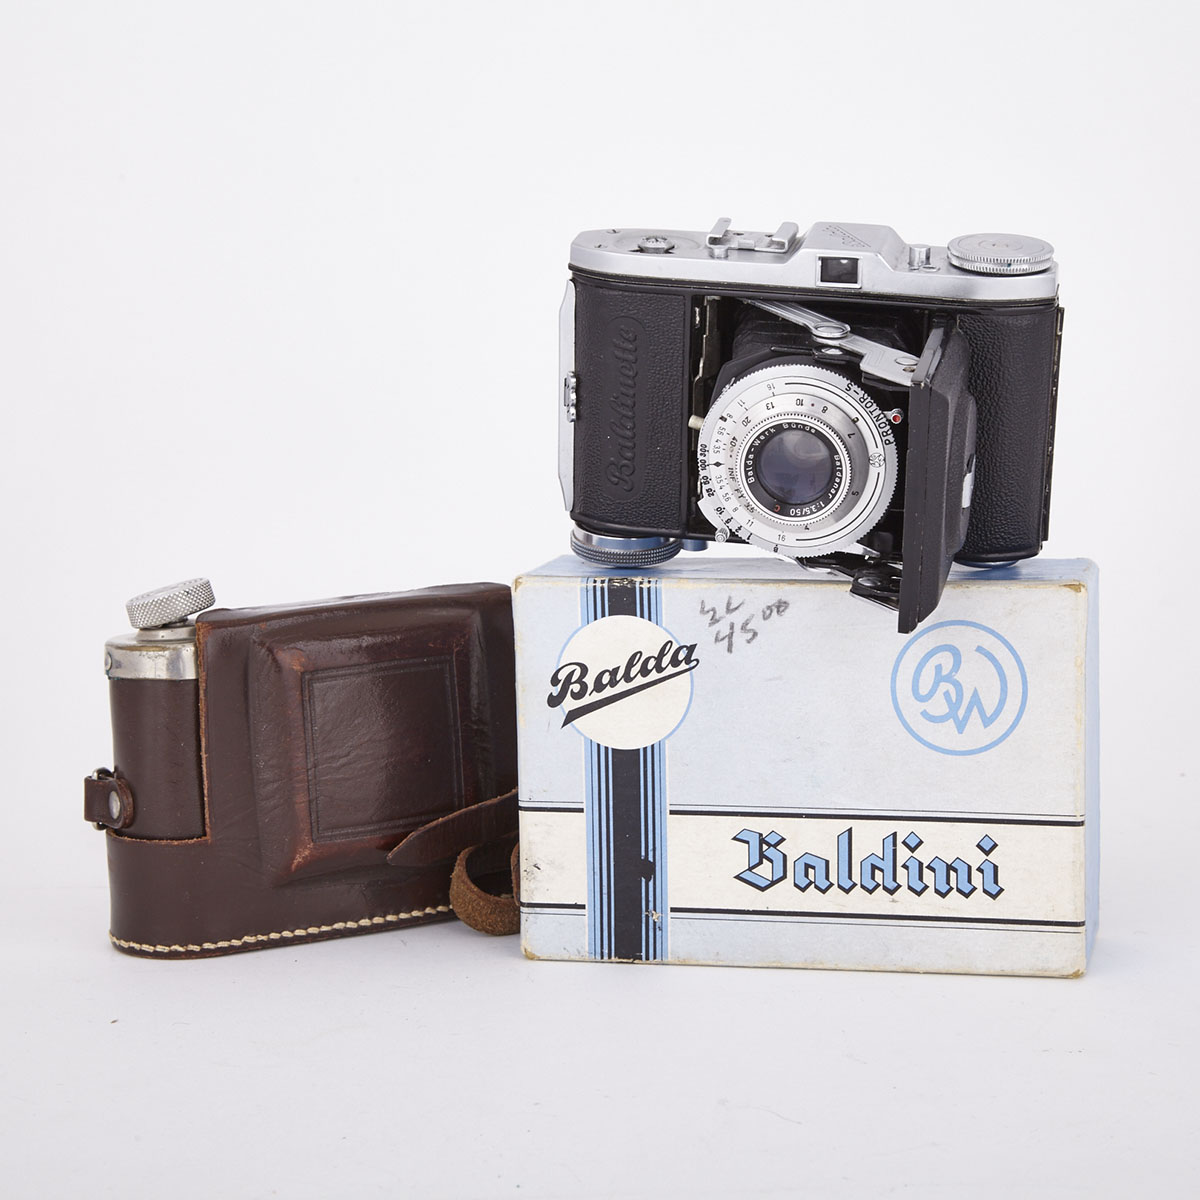 Balda Werk “Baldinette’ Folding Camera, Bünde, West Germany, c.1950